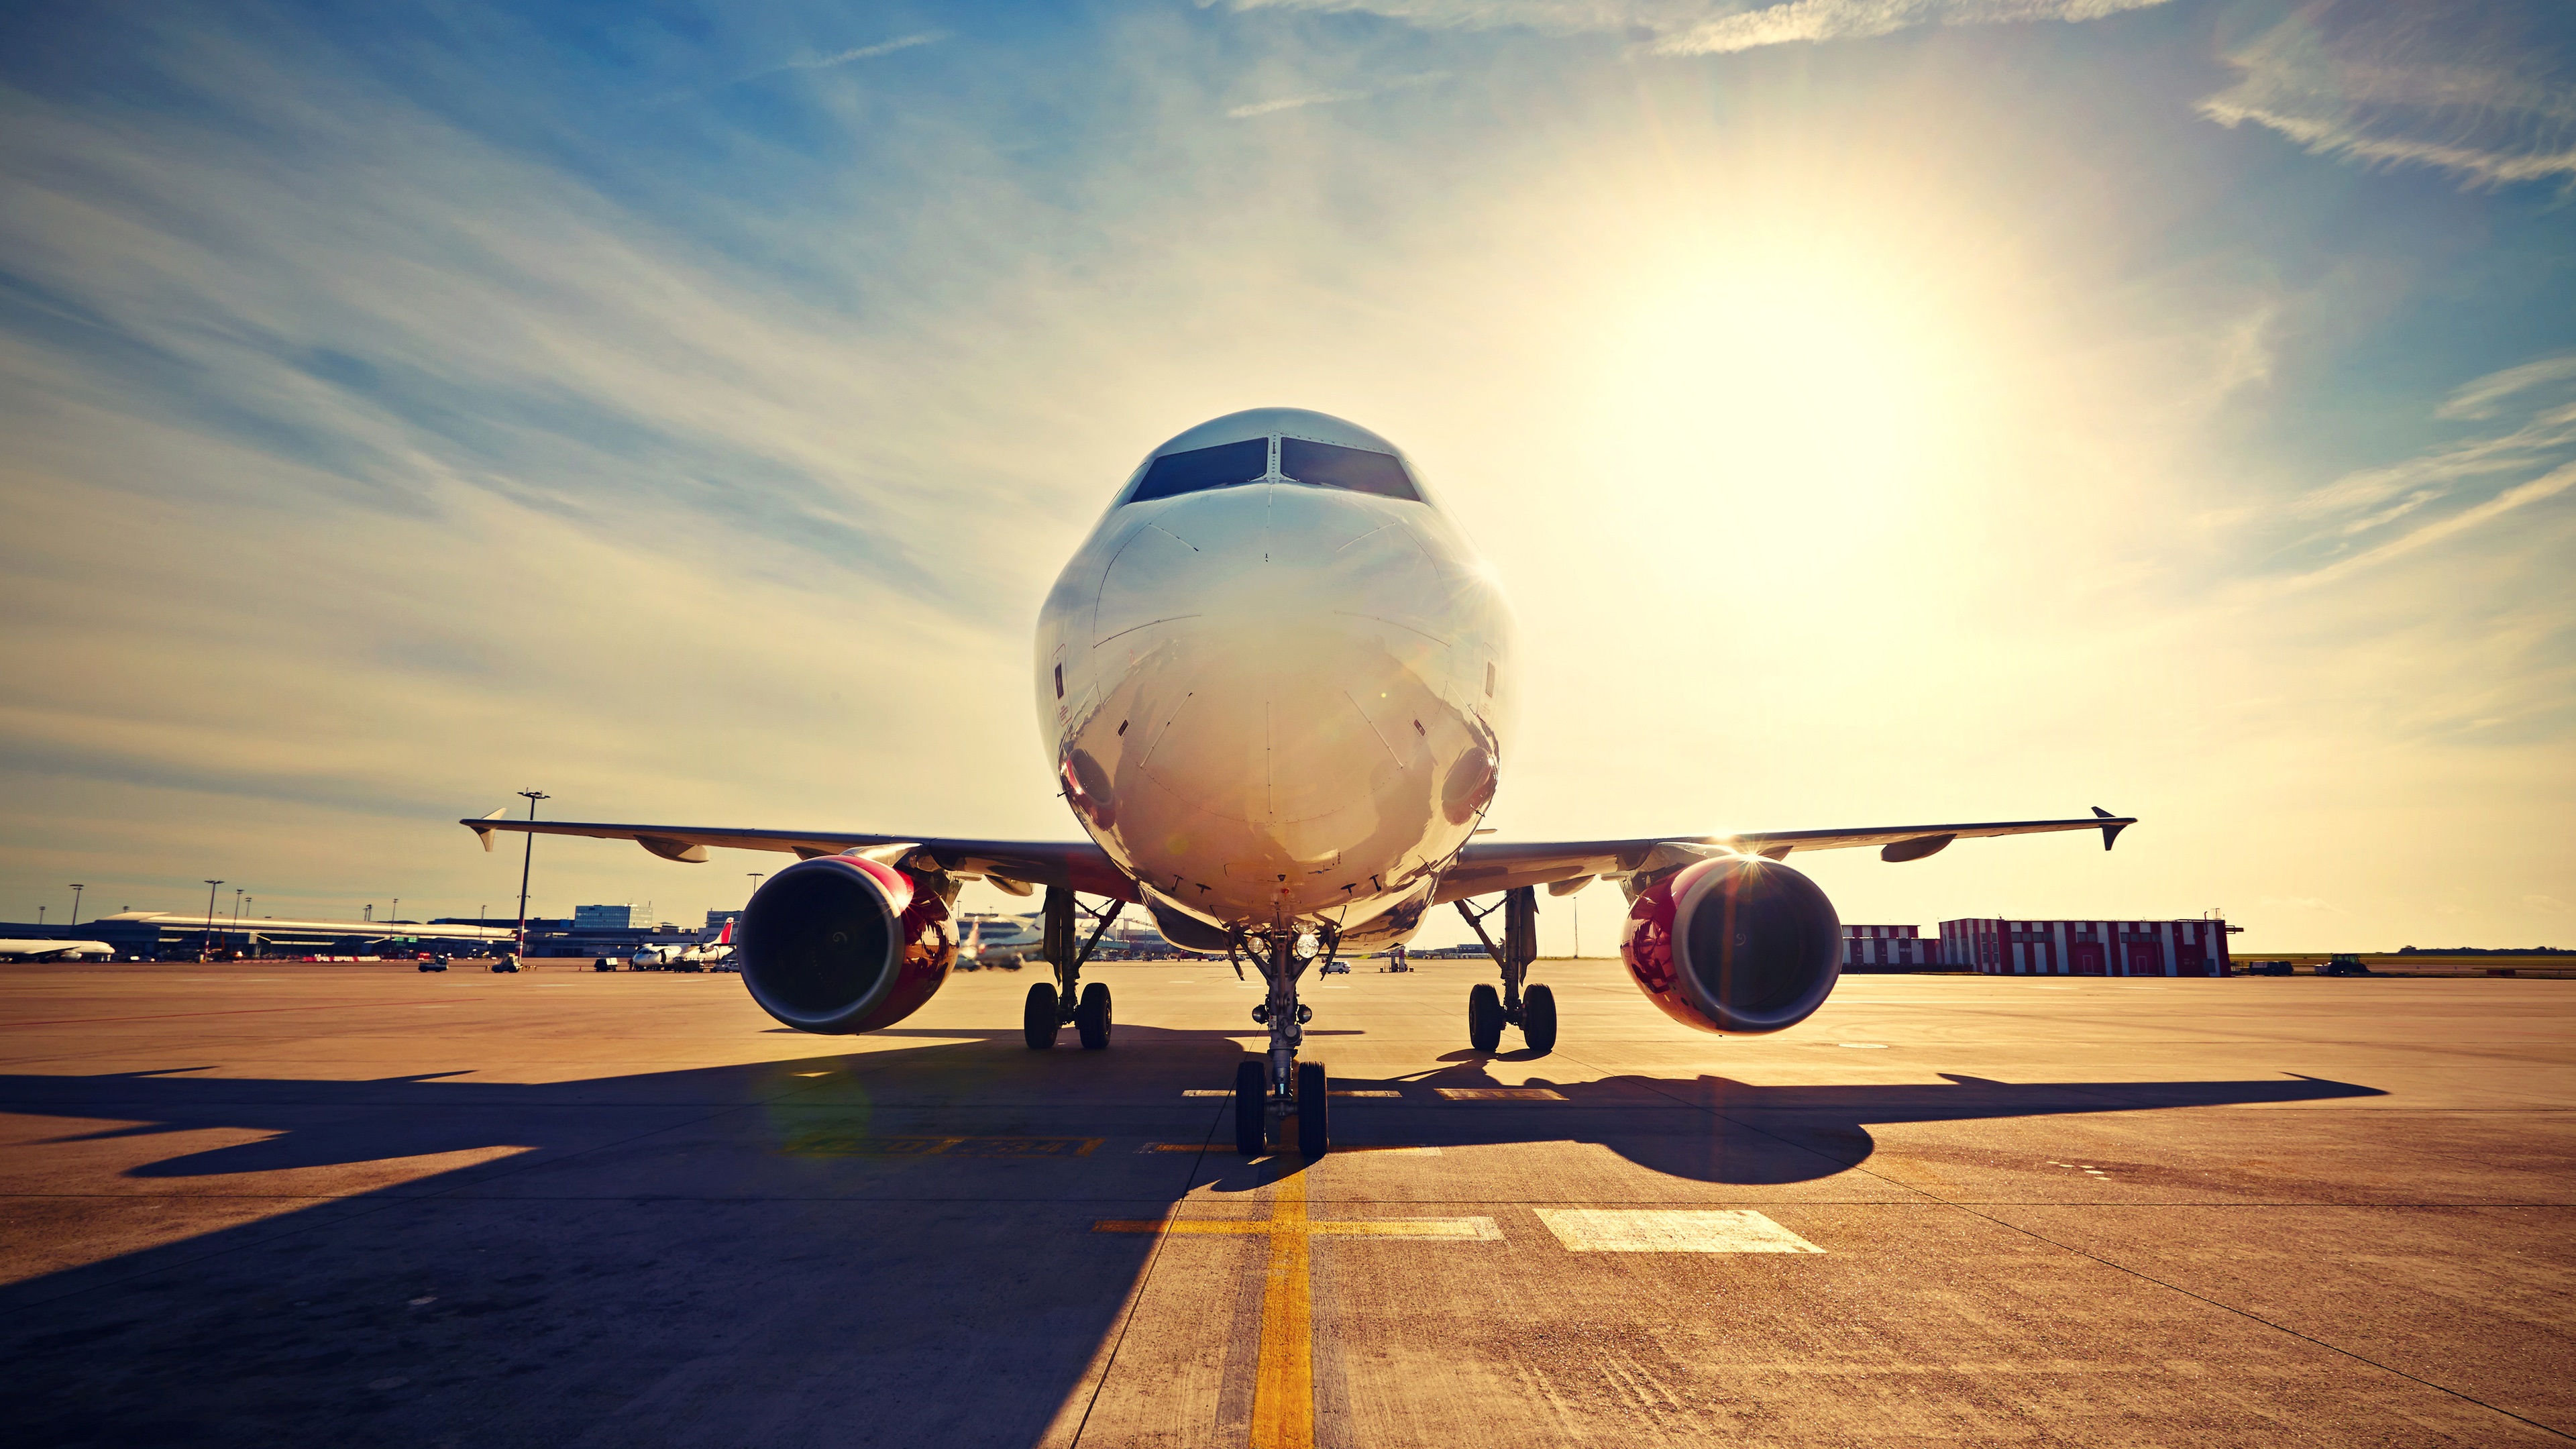 Wallpaper Passenger plane, airport, runway, sun rays 3840x2160 UHD 4K Picture, Image